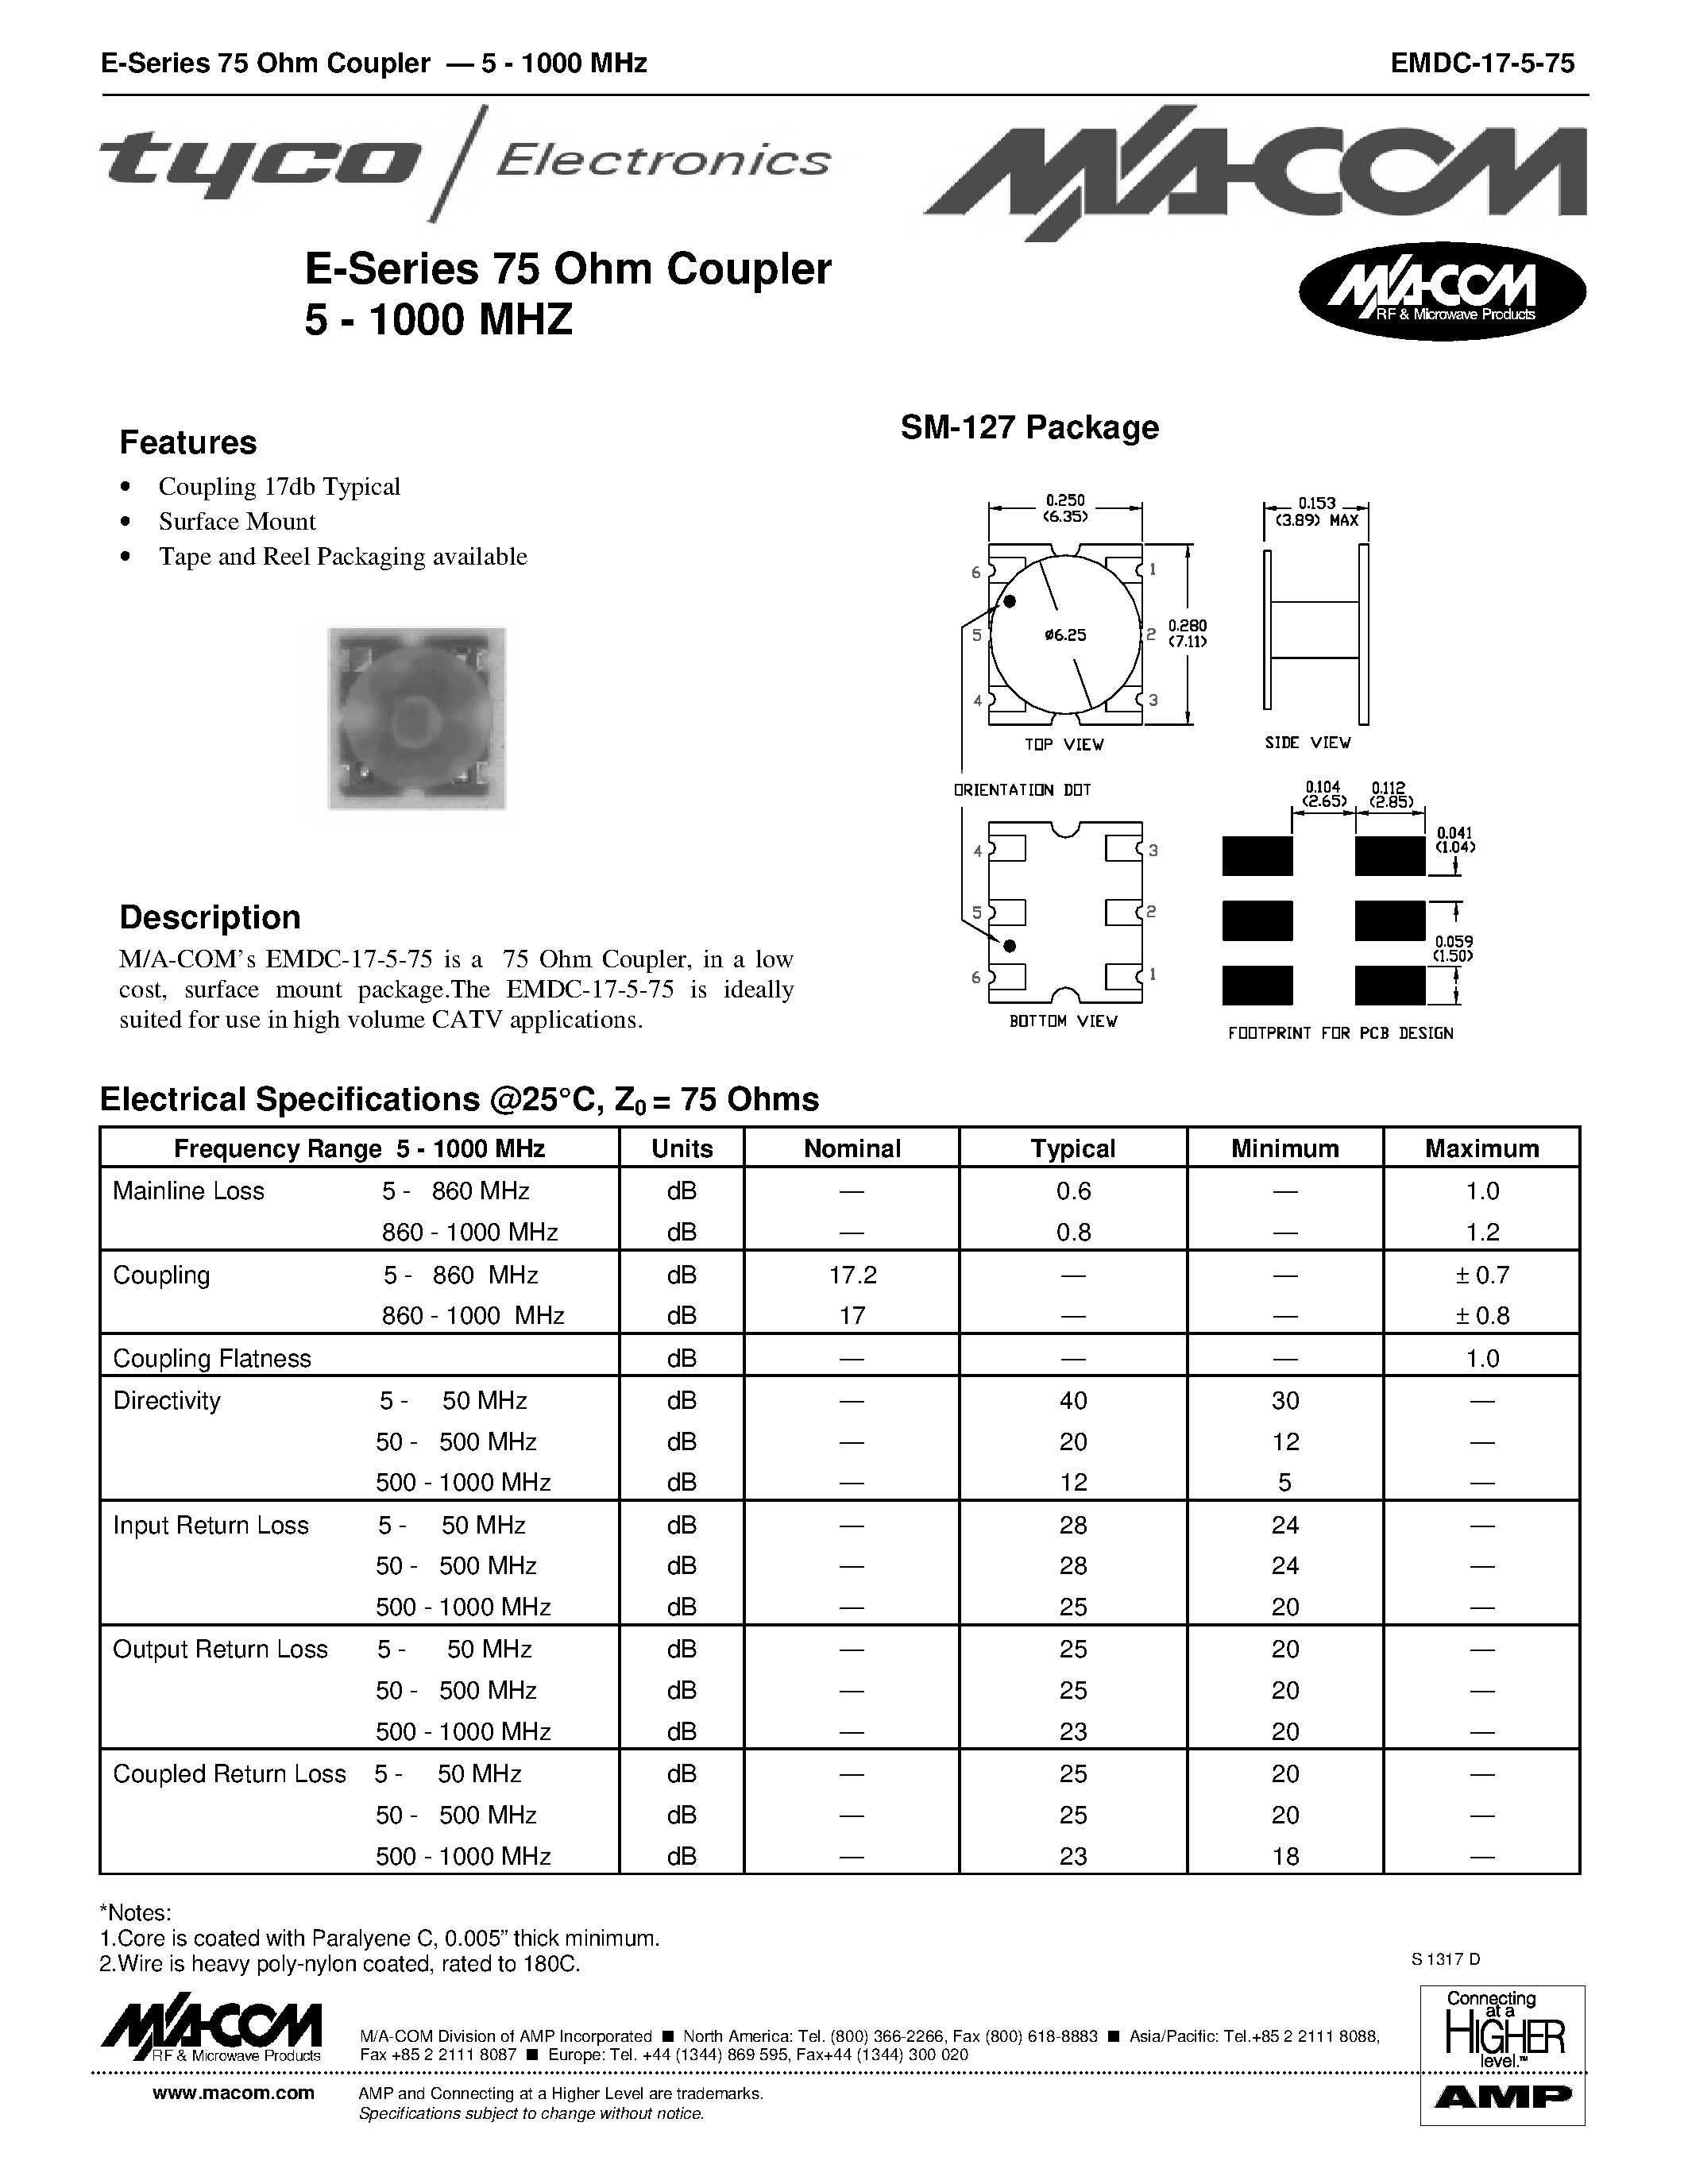 Datasheet EMDC-17-5-75 - E-Series 75 Ohm Coupler 5 - 1000 MHZ page 1